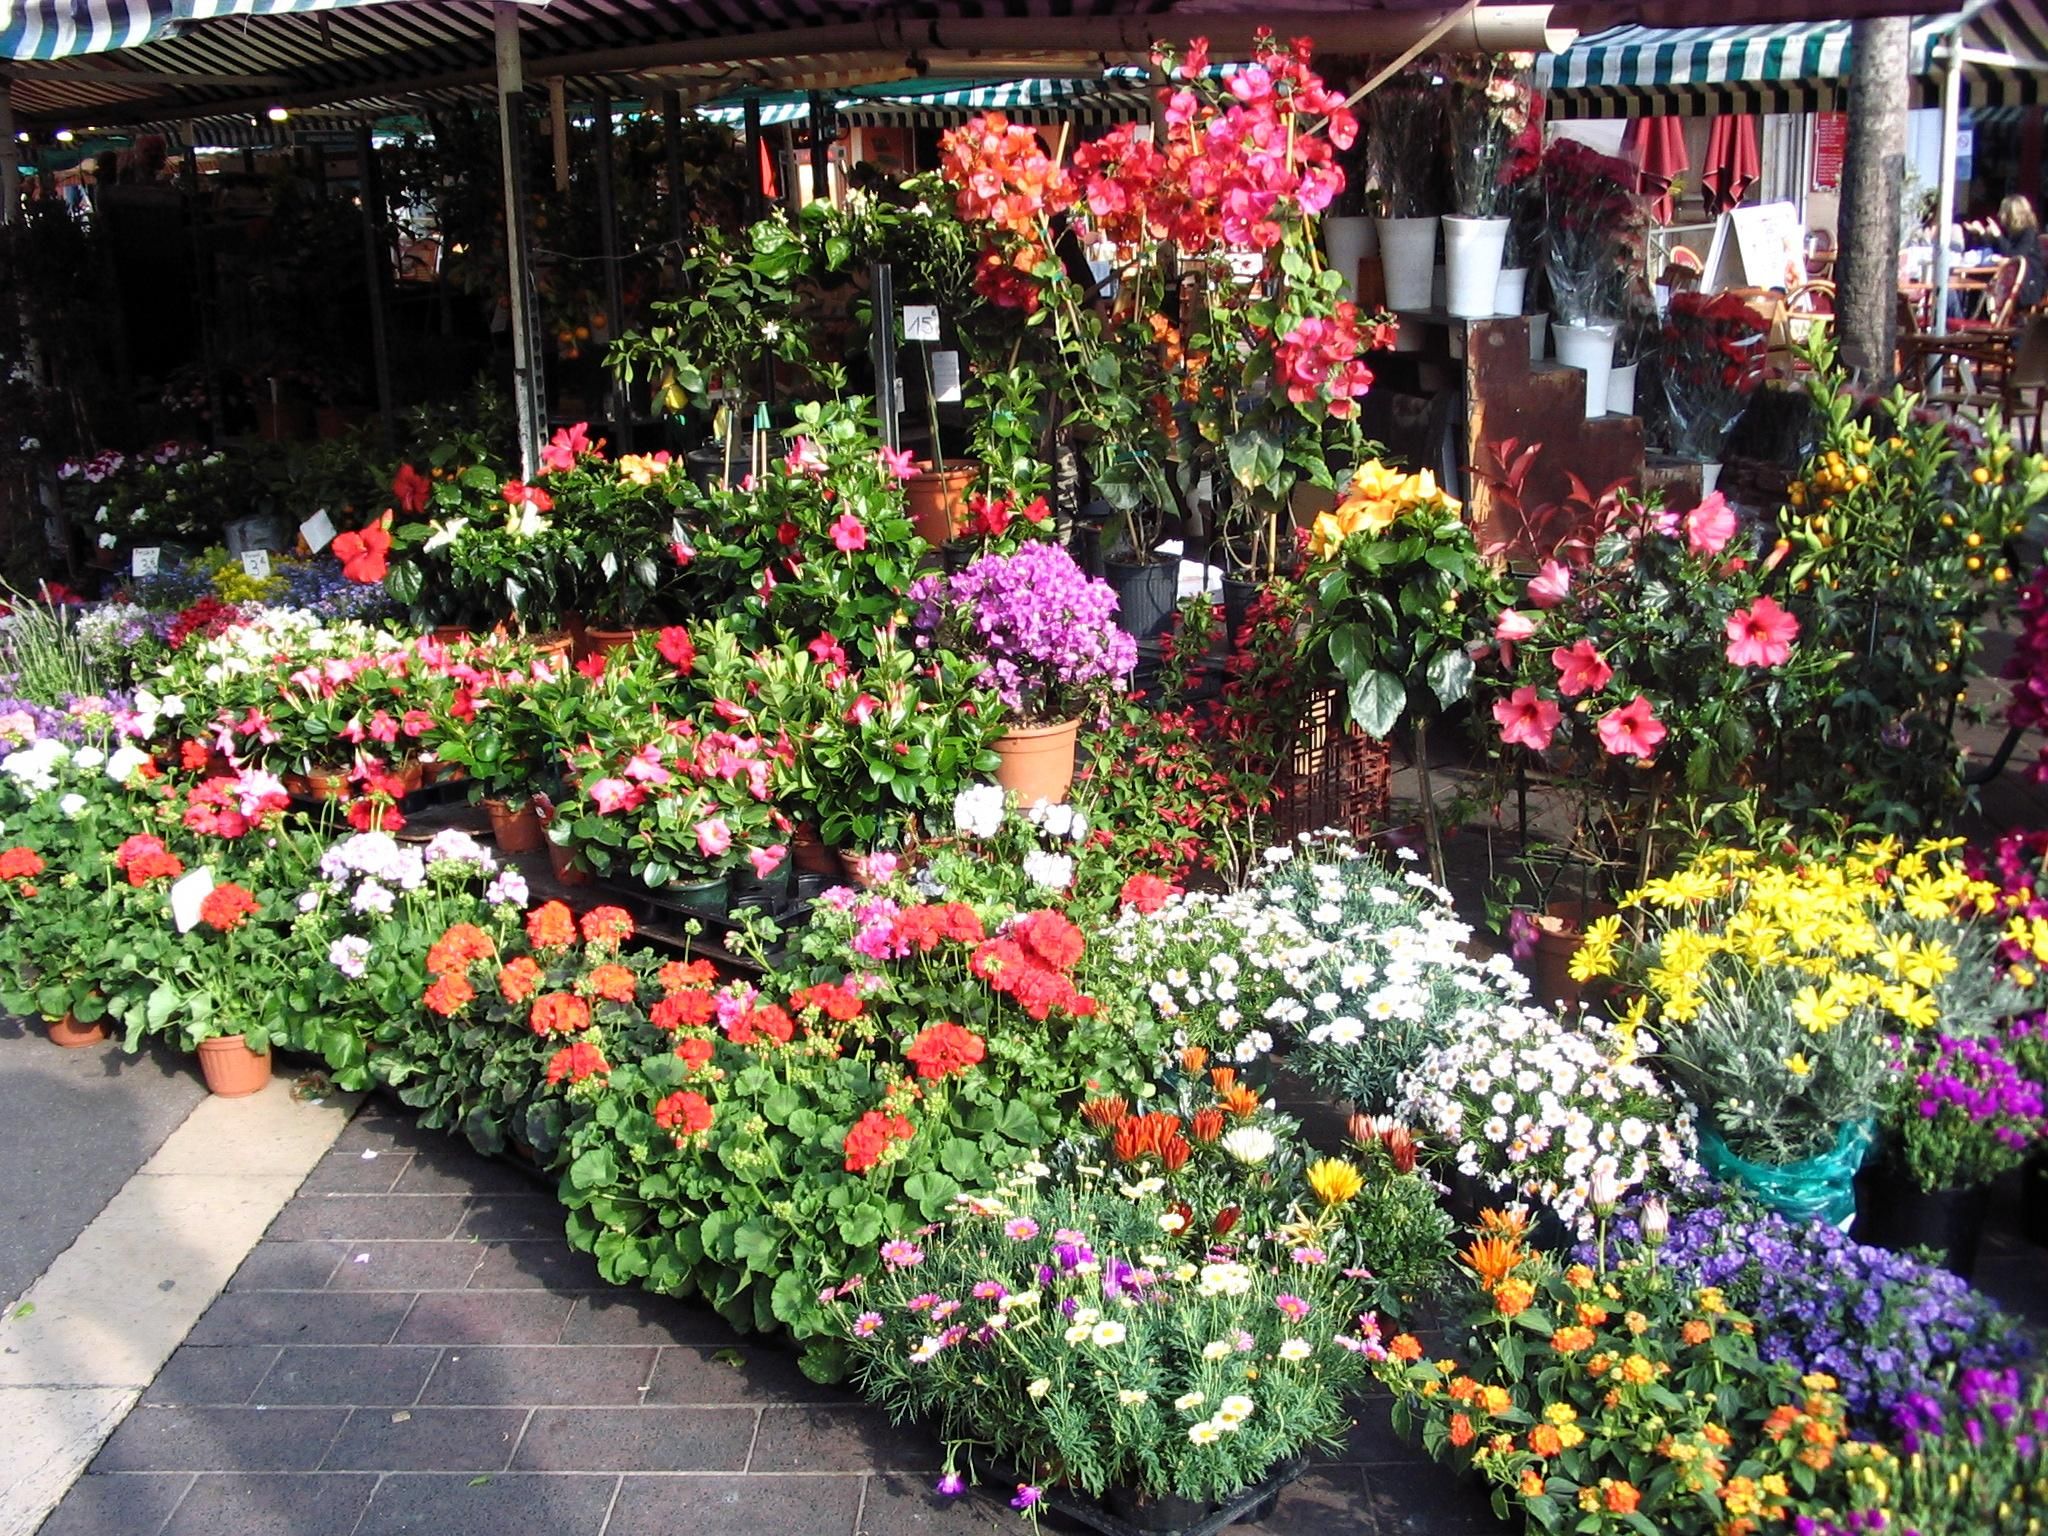 File:Flower market.jpg - Wikimedia Commons